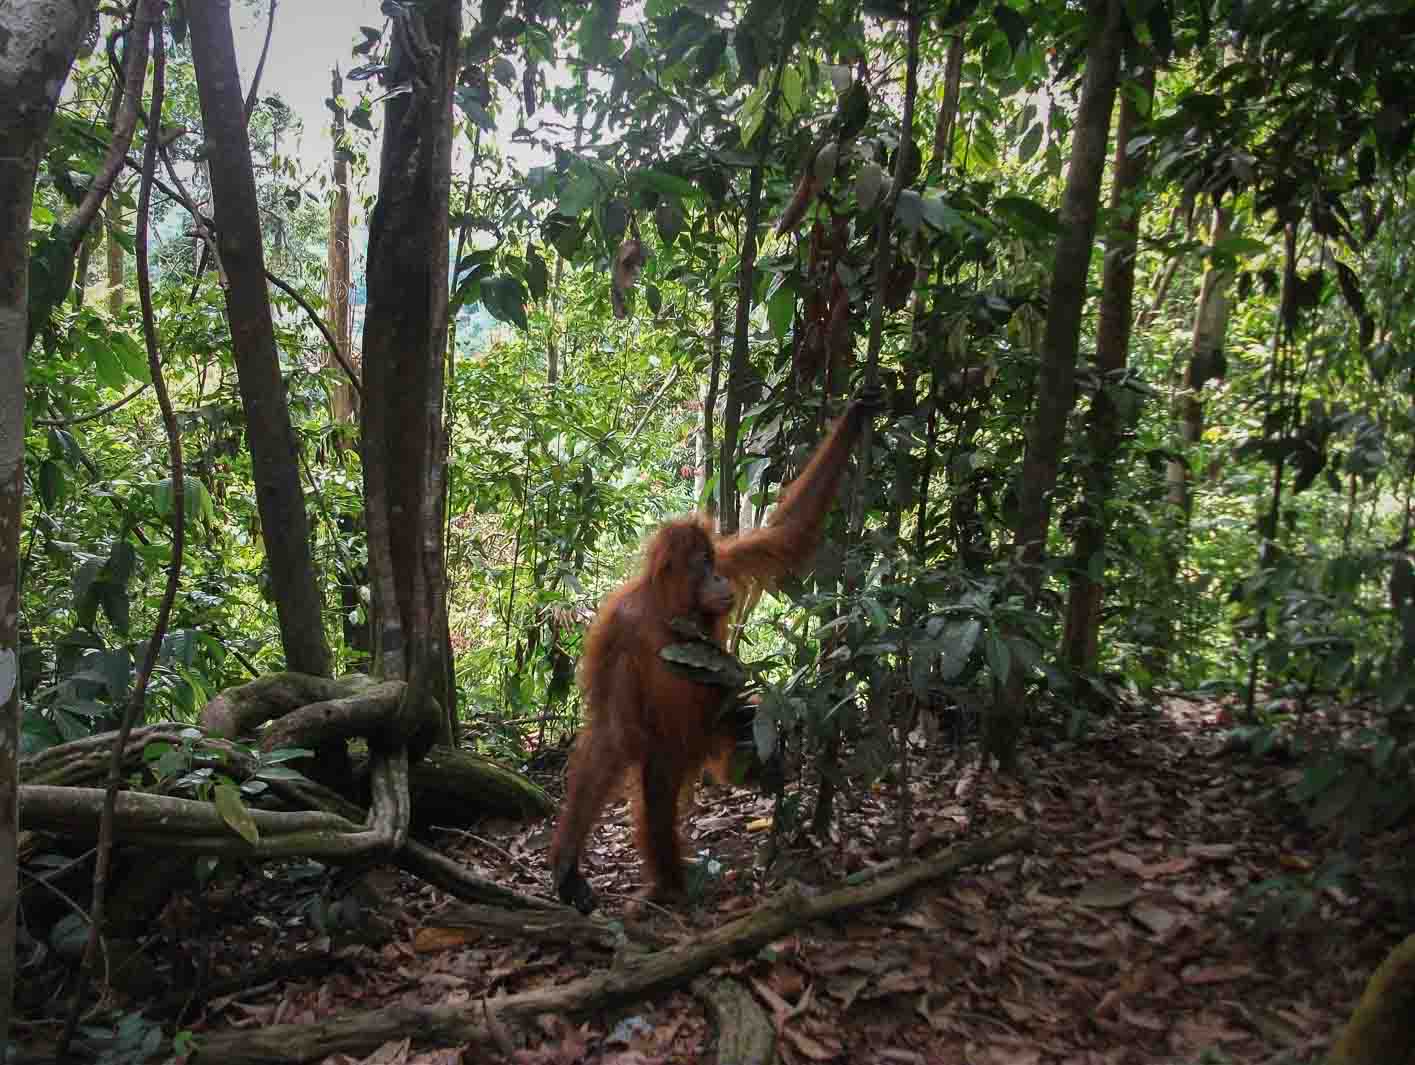 two days trekking to see Orangutan walking in the jungle of Bukit Lawang in Sumatra